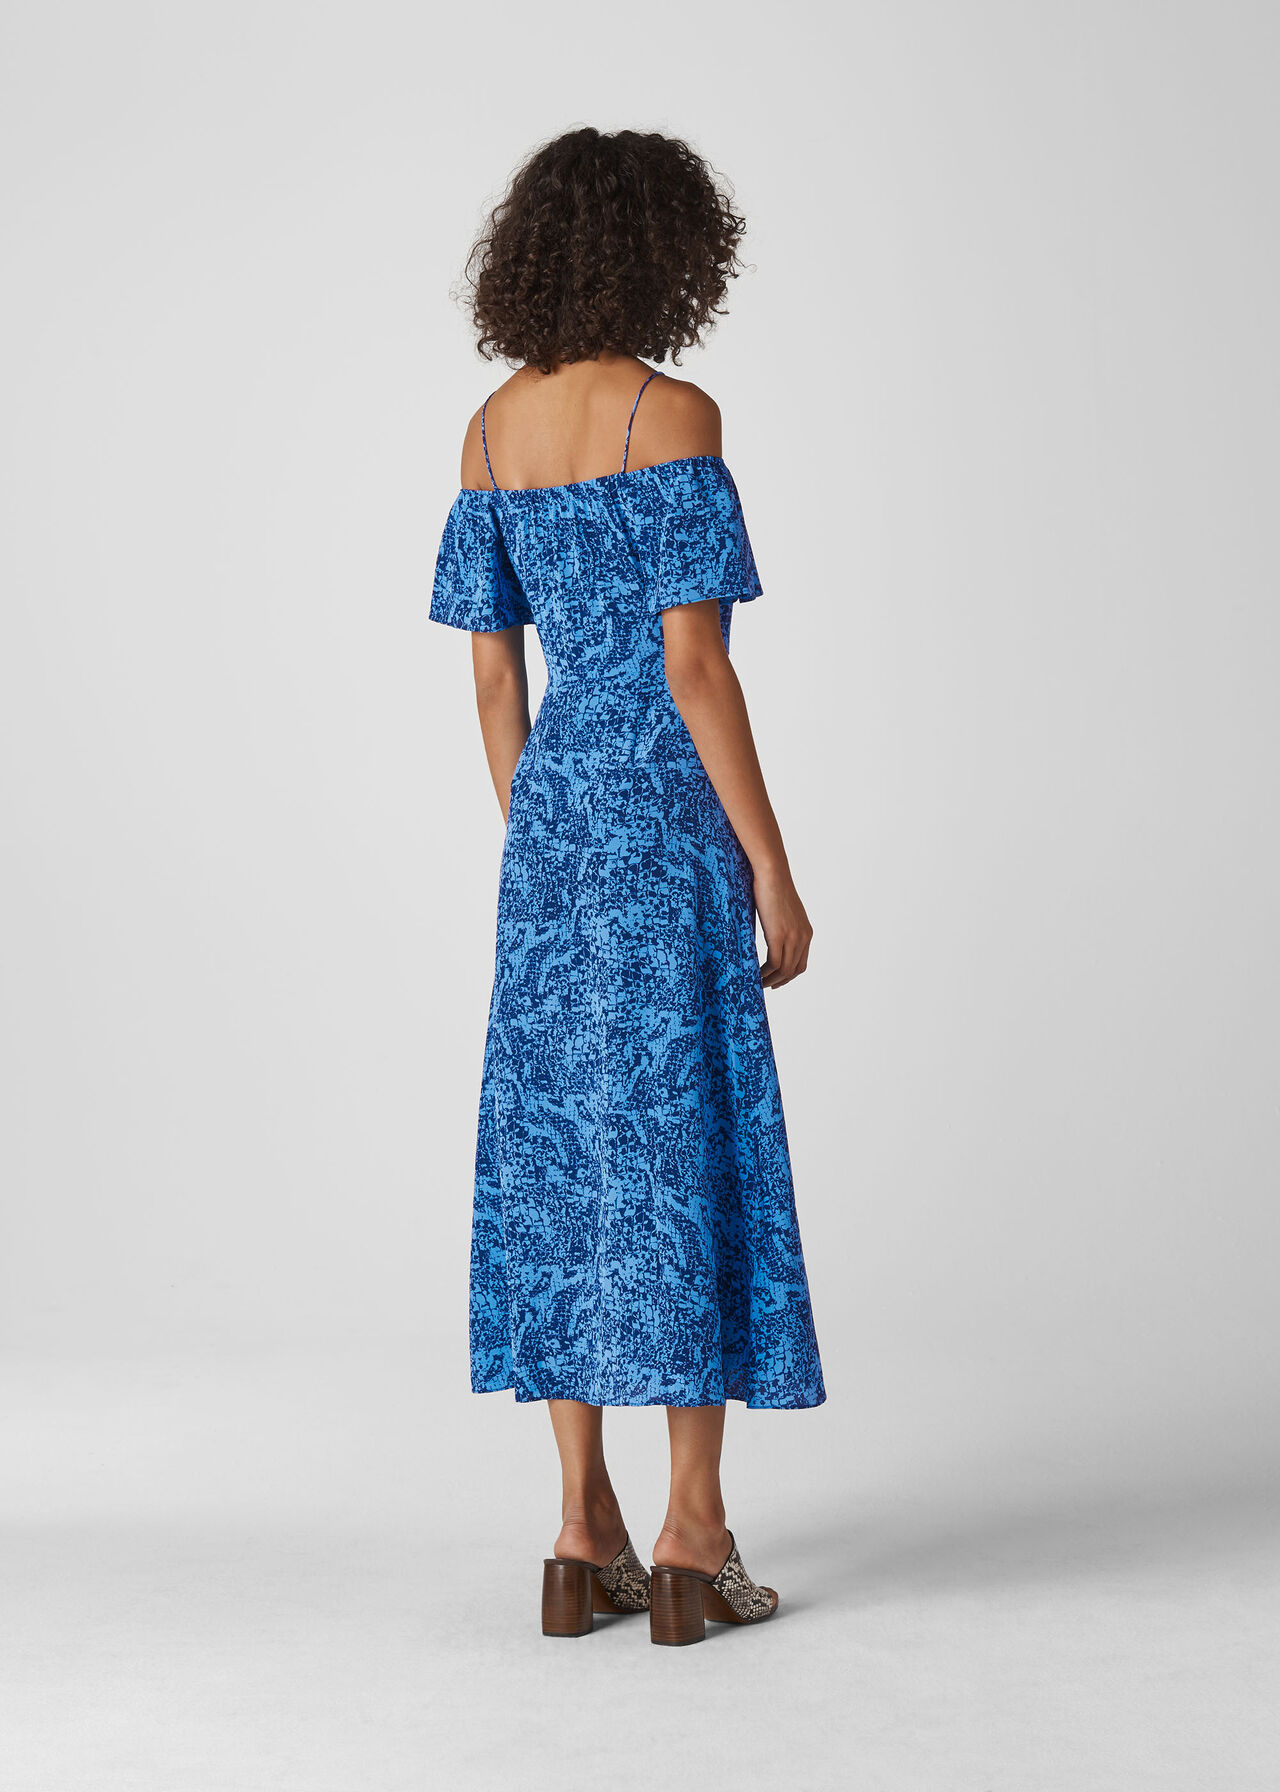 Bardot Snake Print Silk Dress Blue/Multi